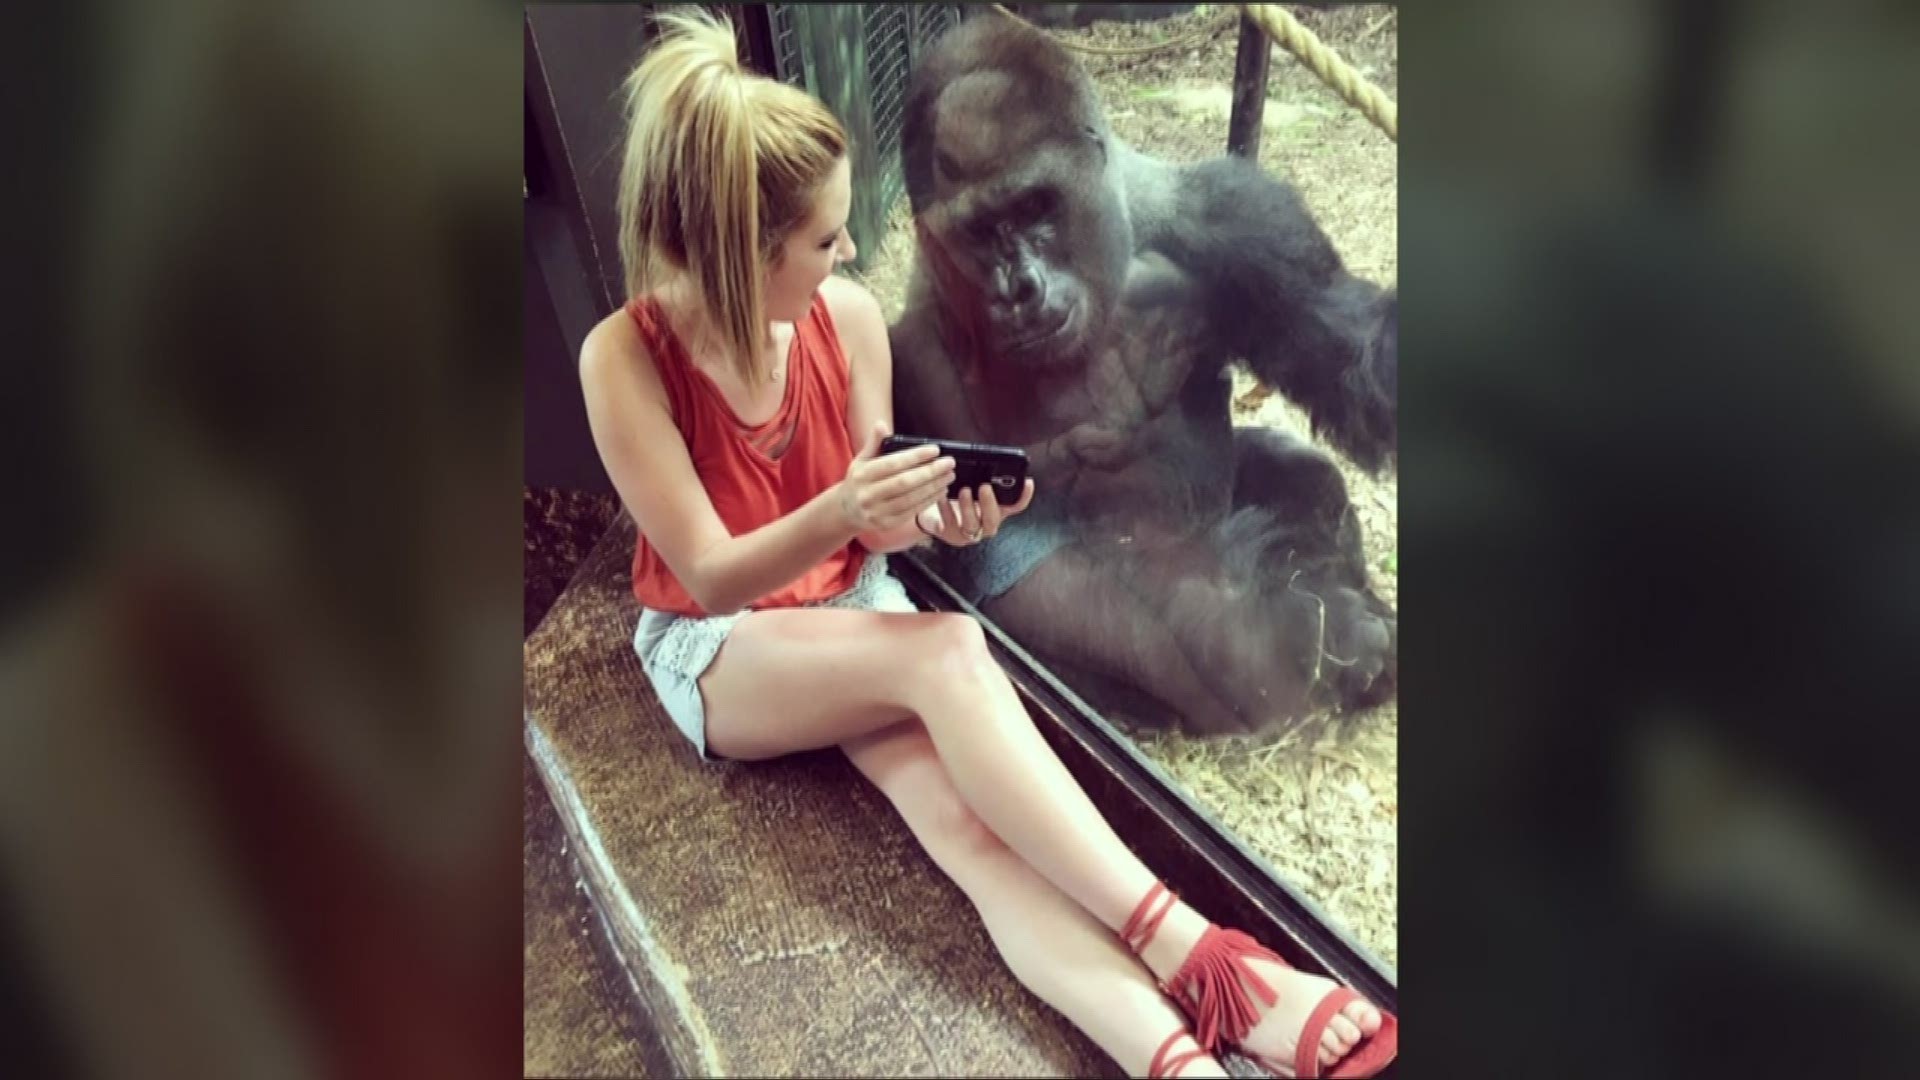 Techy gorilla brings awareness to species